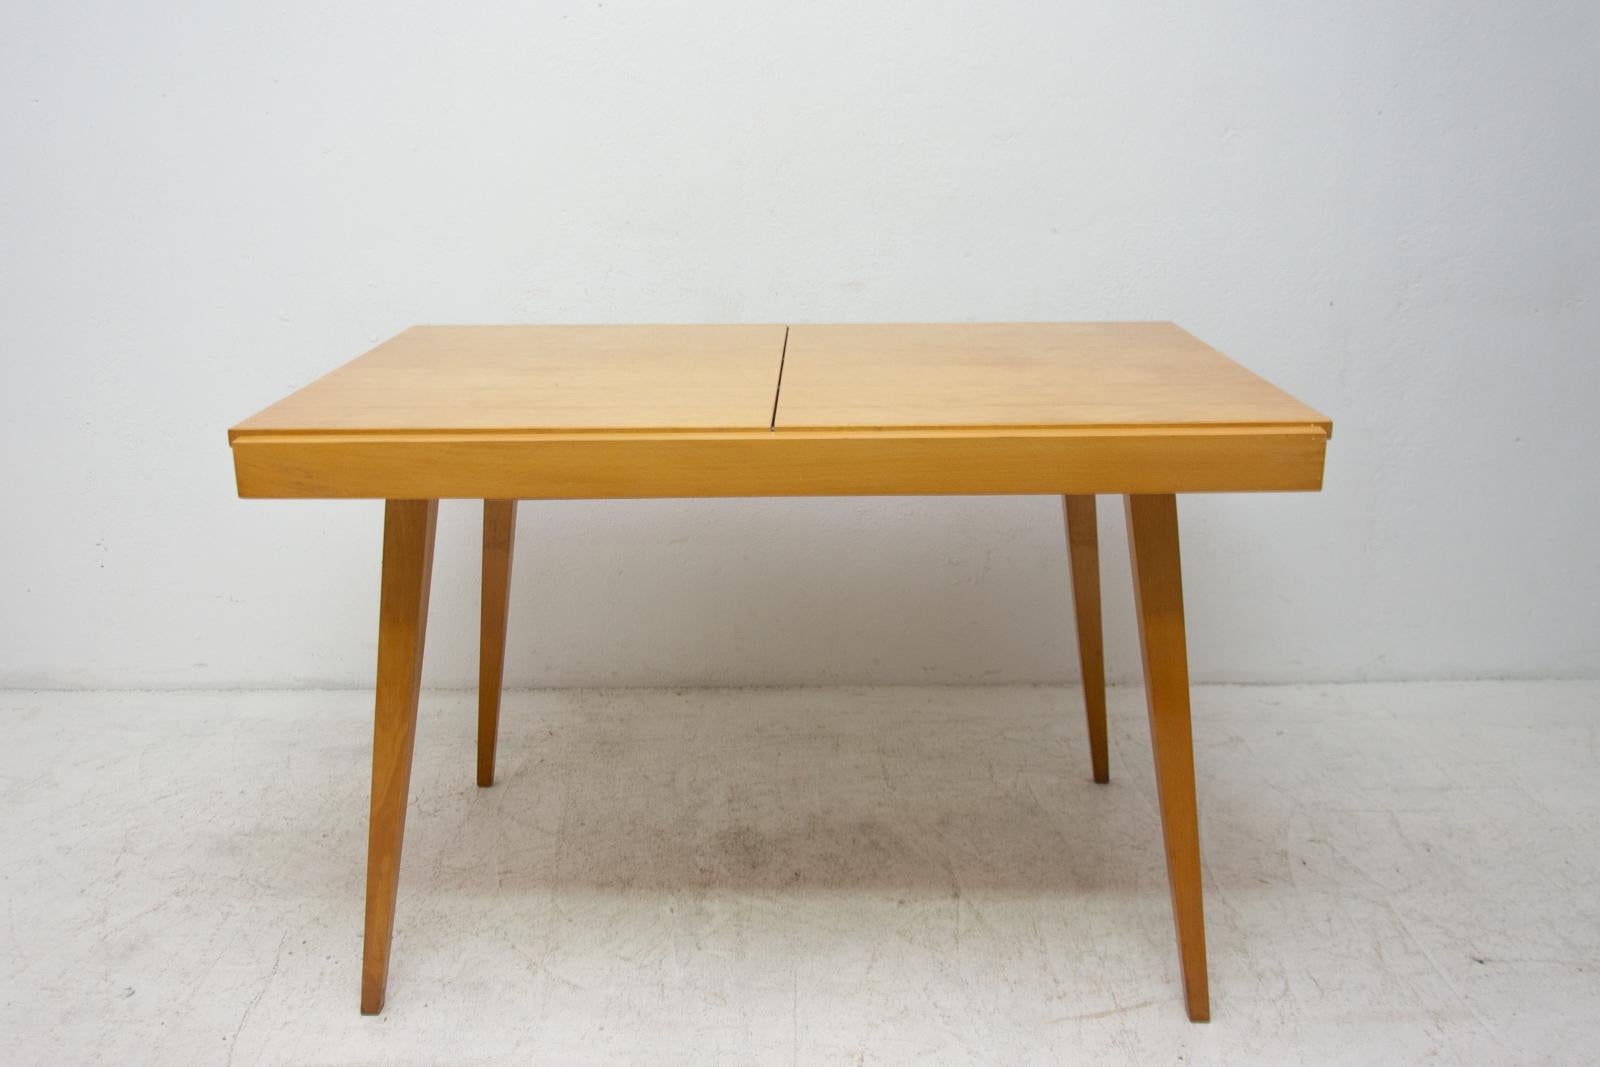 Midcentury folding dining table from the 1960s, it was designed by František Jirák for Tatra nabytok Pravenec. ashwood veneer. Very interesting shaping. In very good vintage condition.

Measures: Unfolded 180 cm.